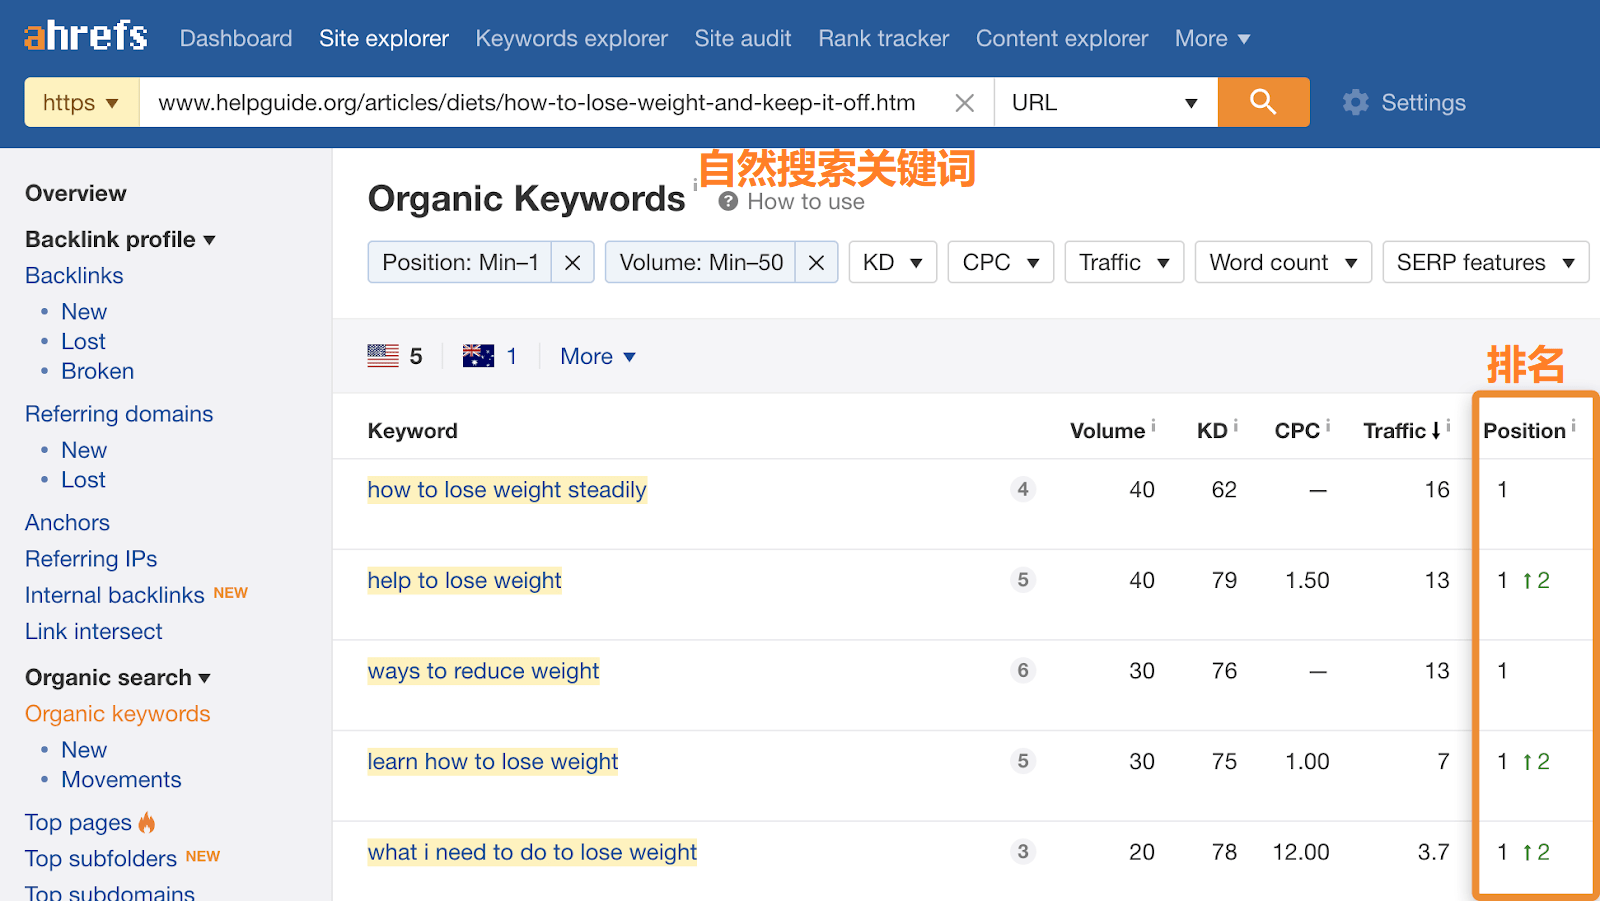 OK27 supporting keyword rankings